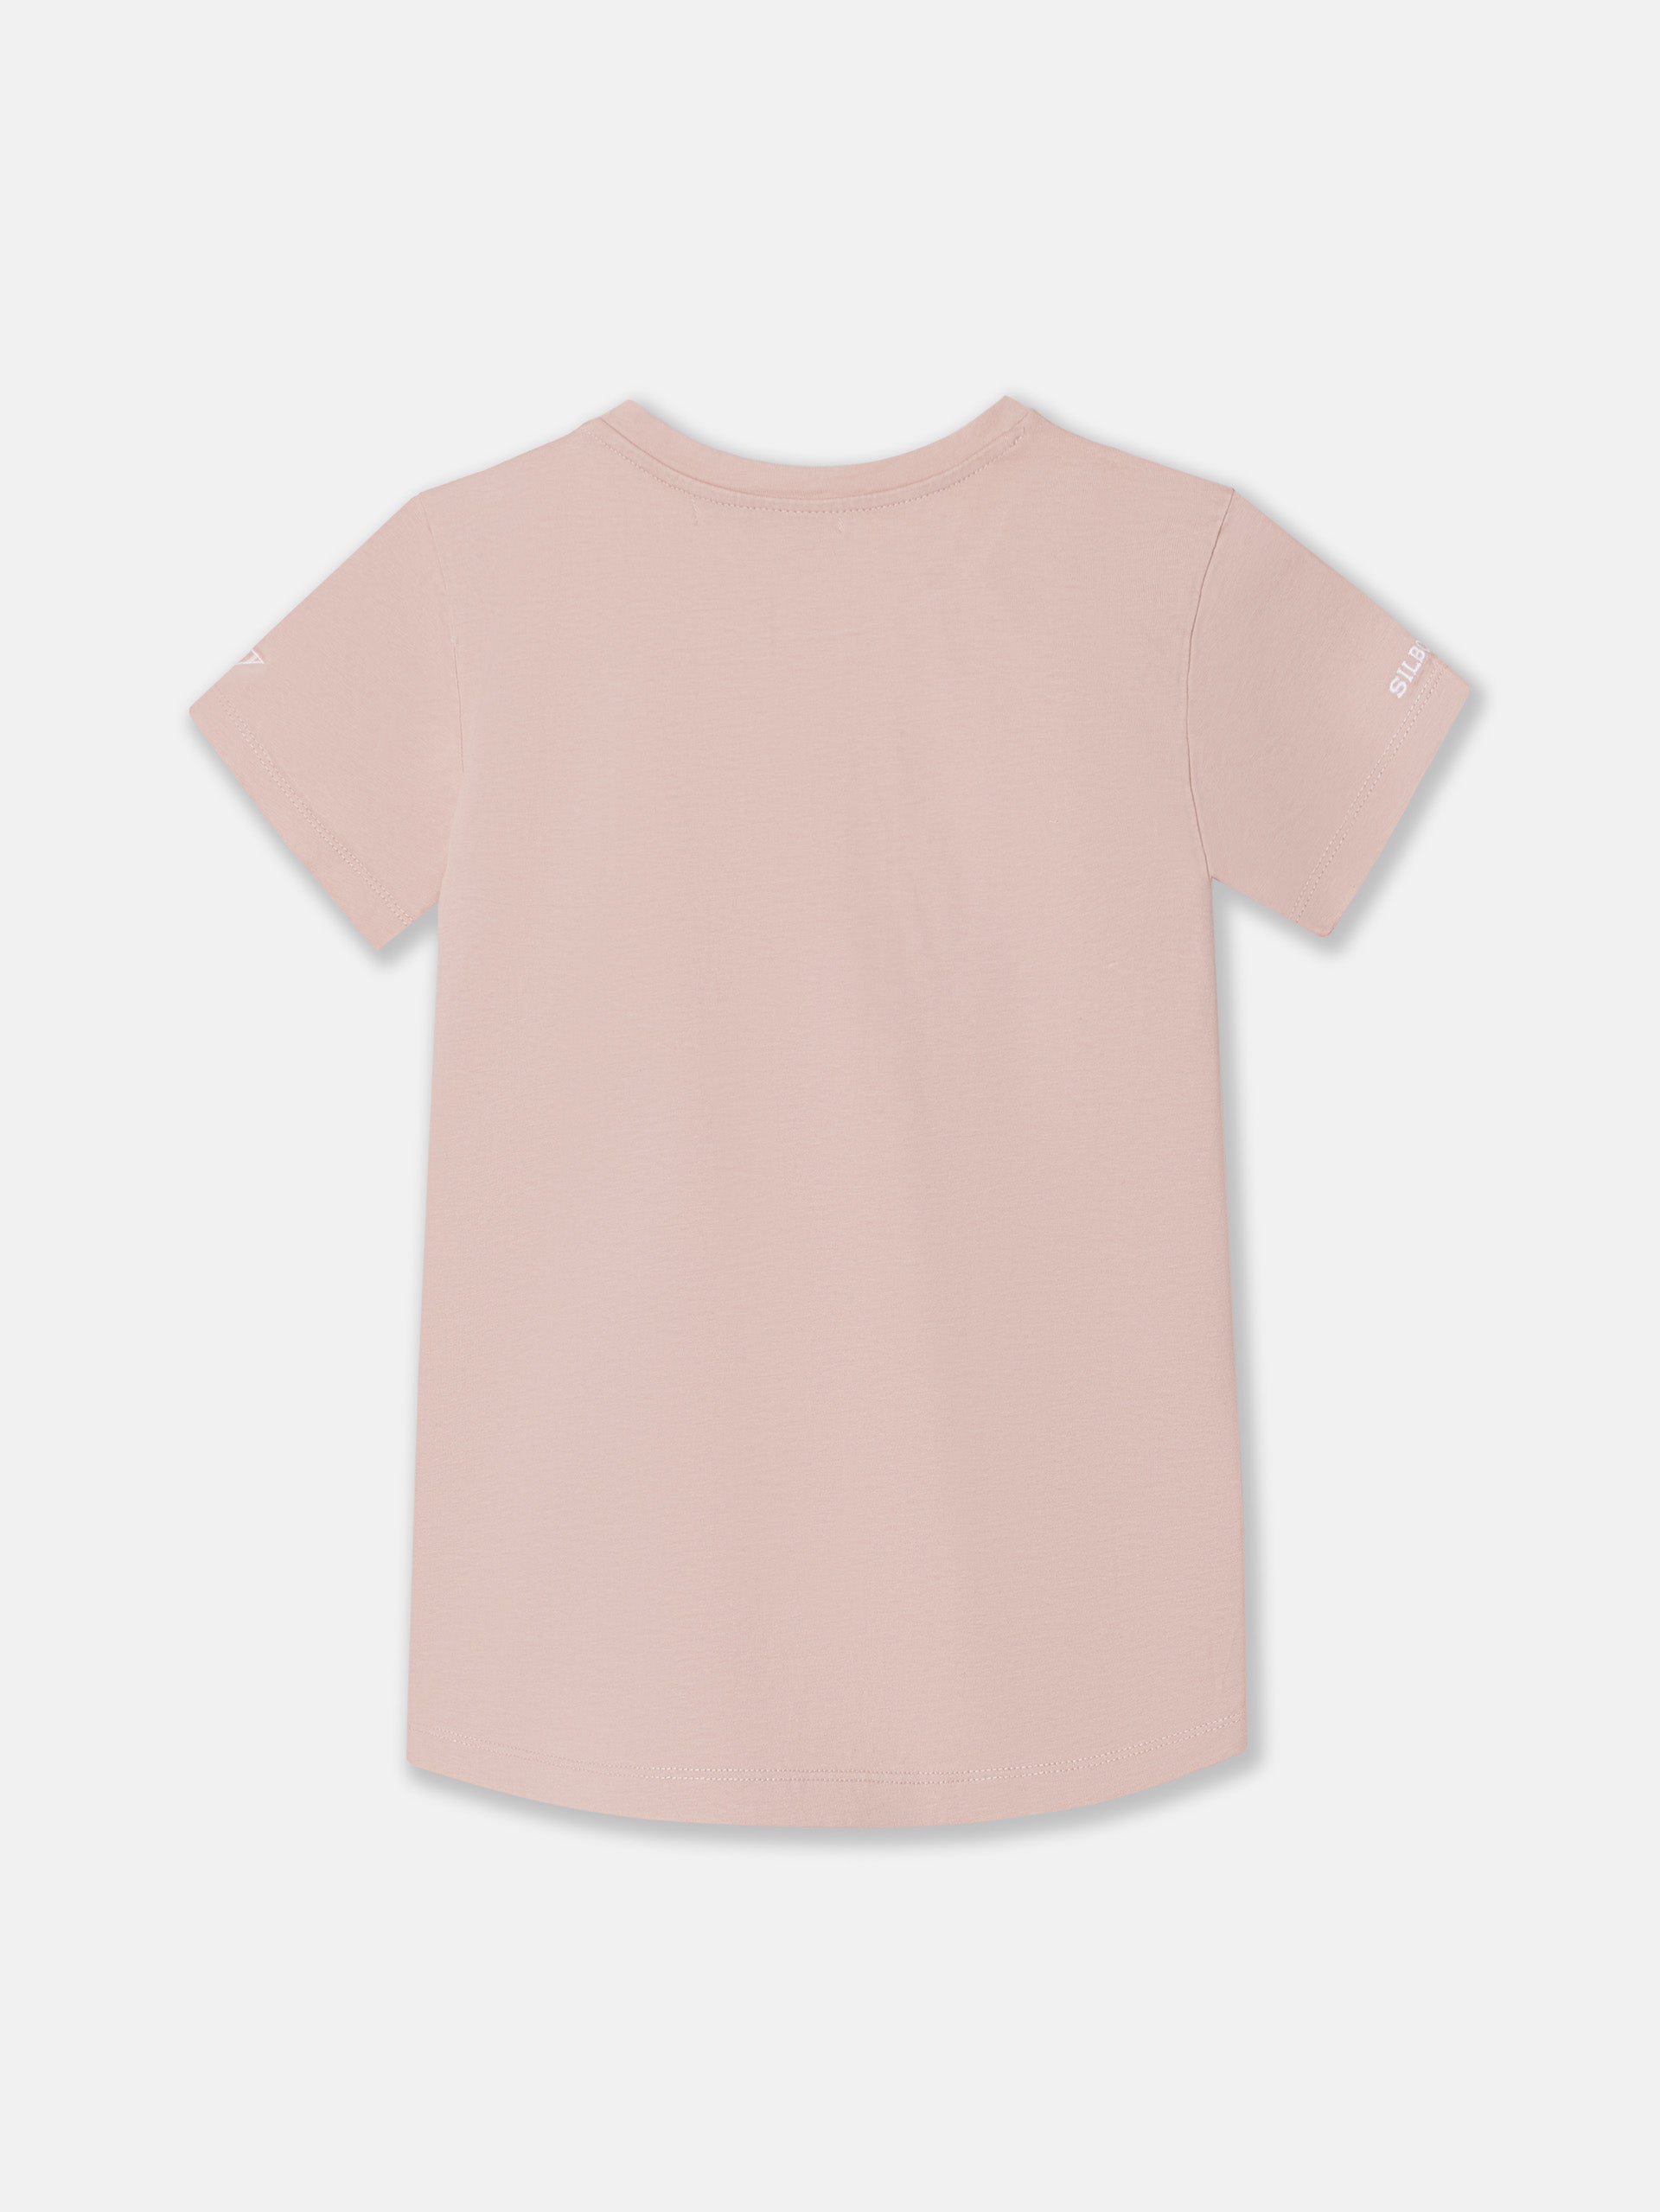 Camiseta woman raqueta real betis rosa